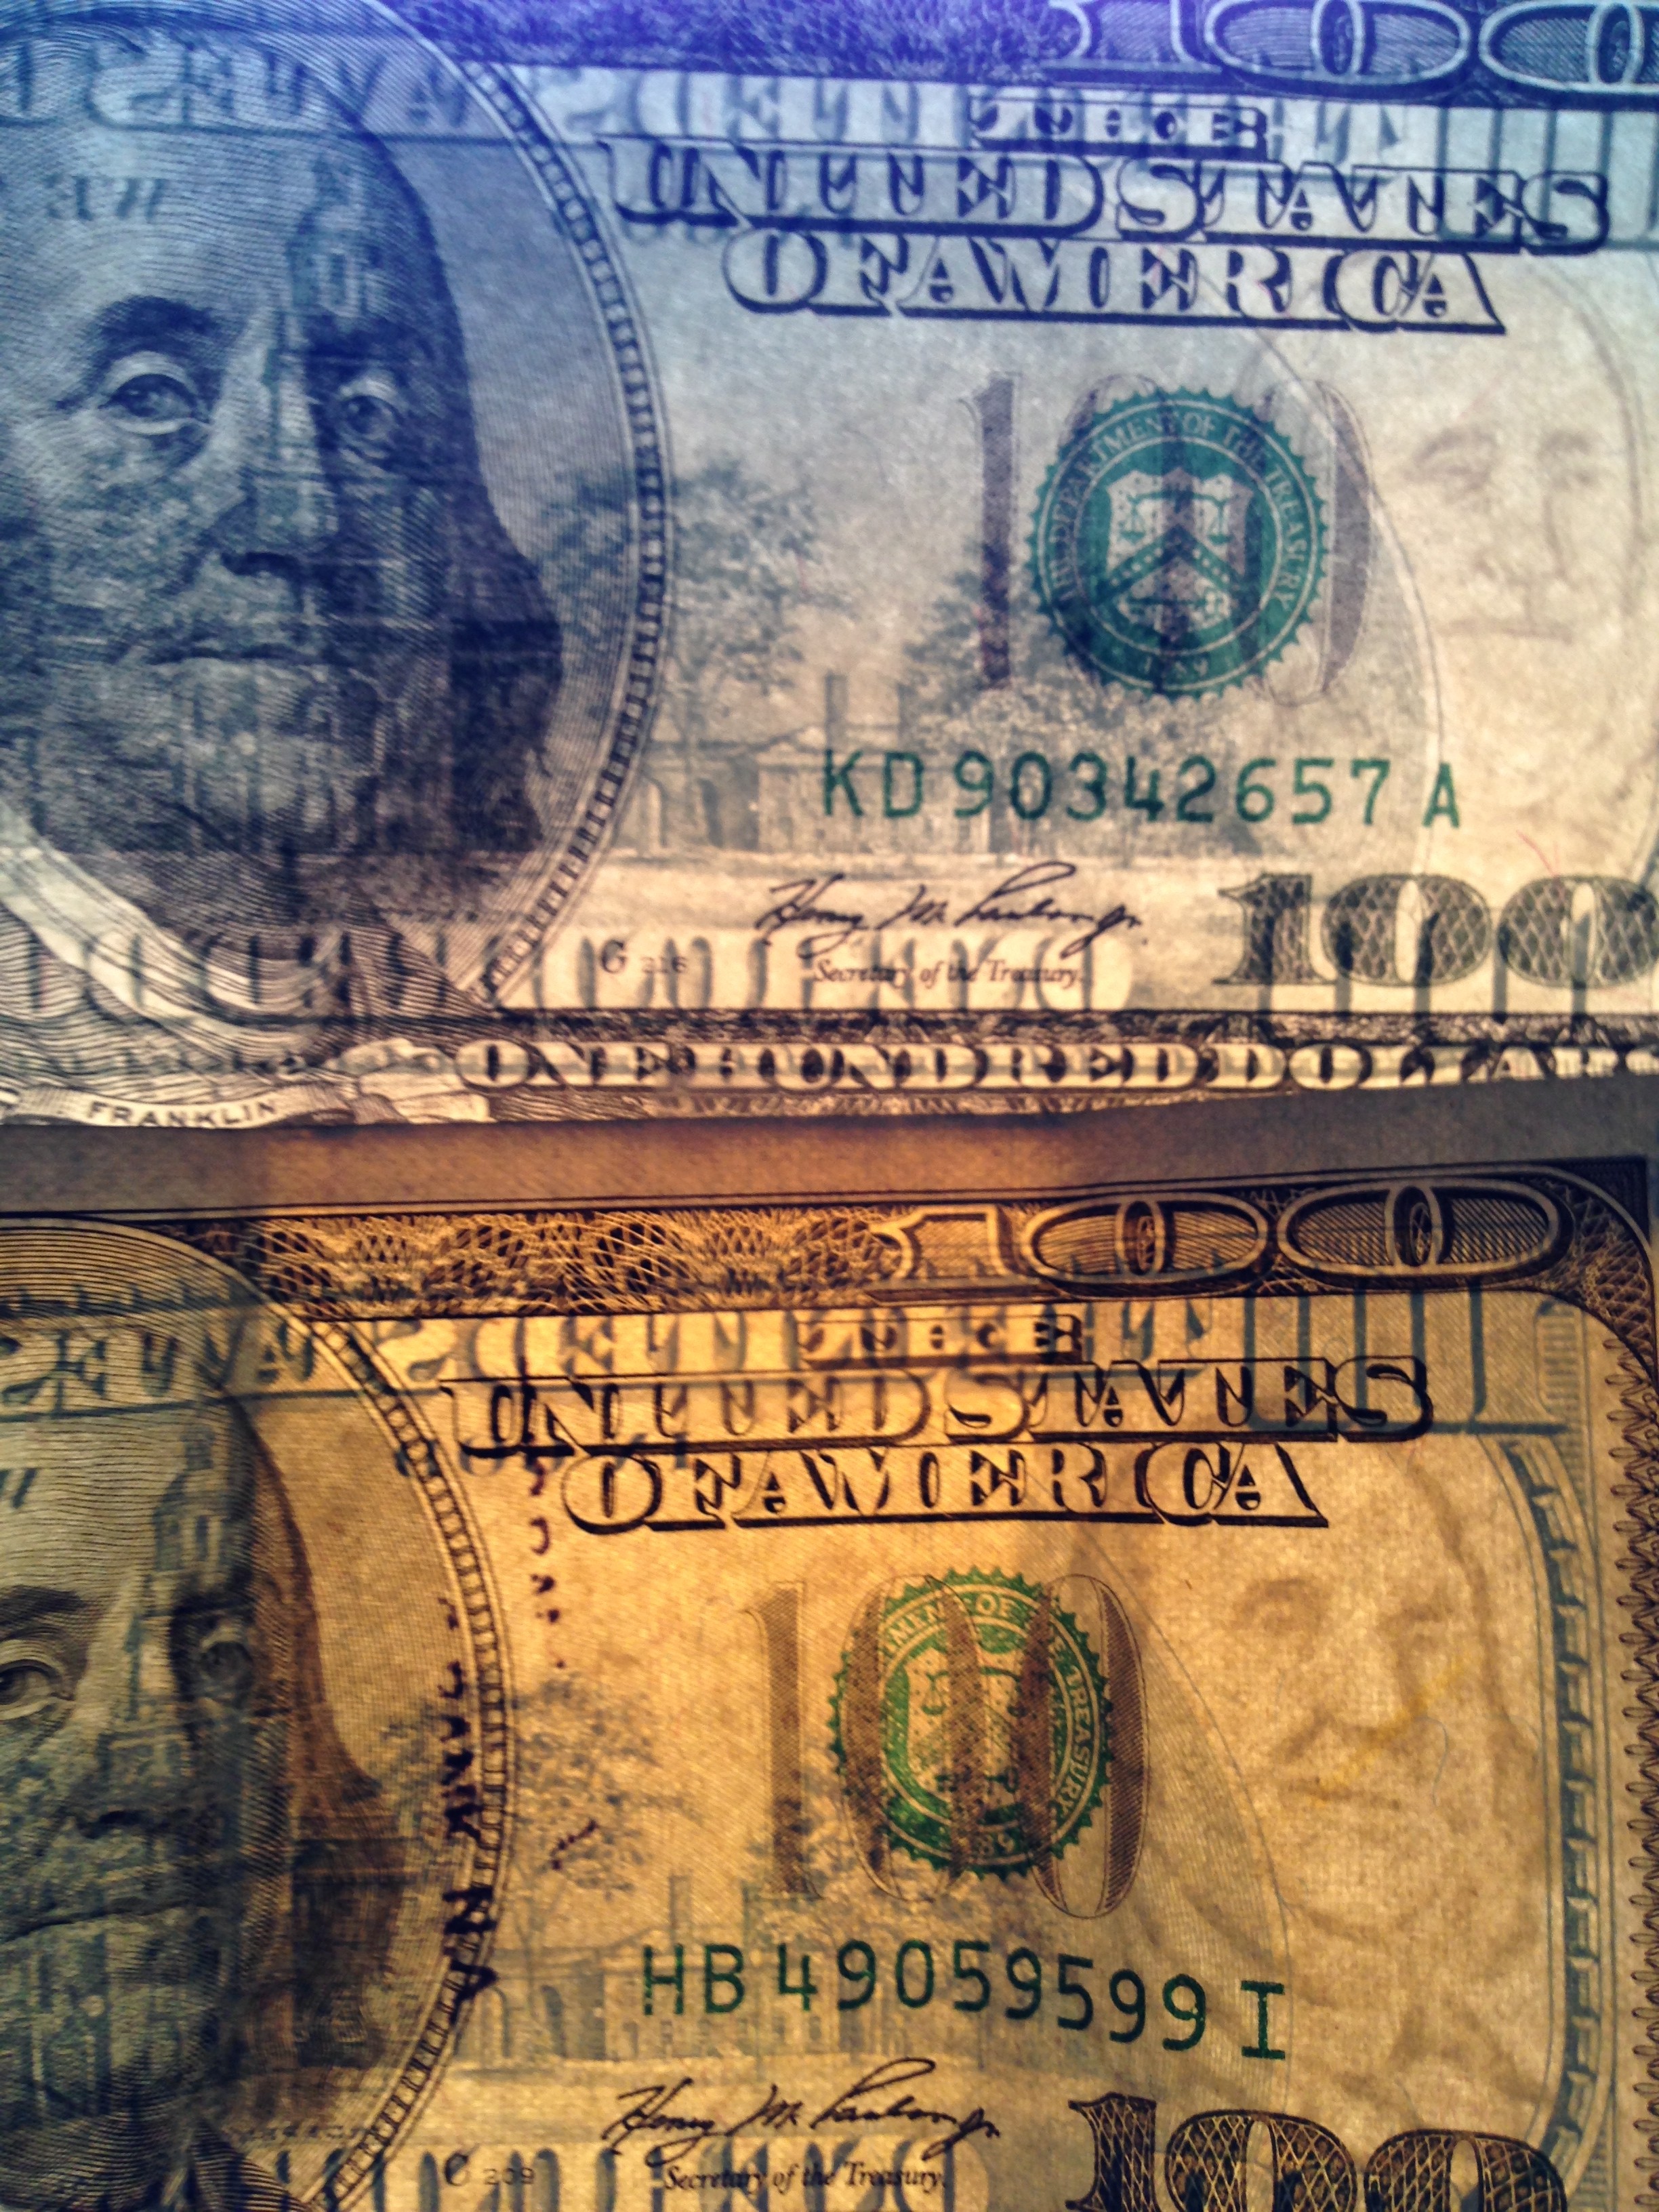 Fake Dollars Funny Money- Custom Printed — screengemsinc